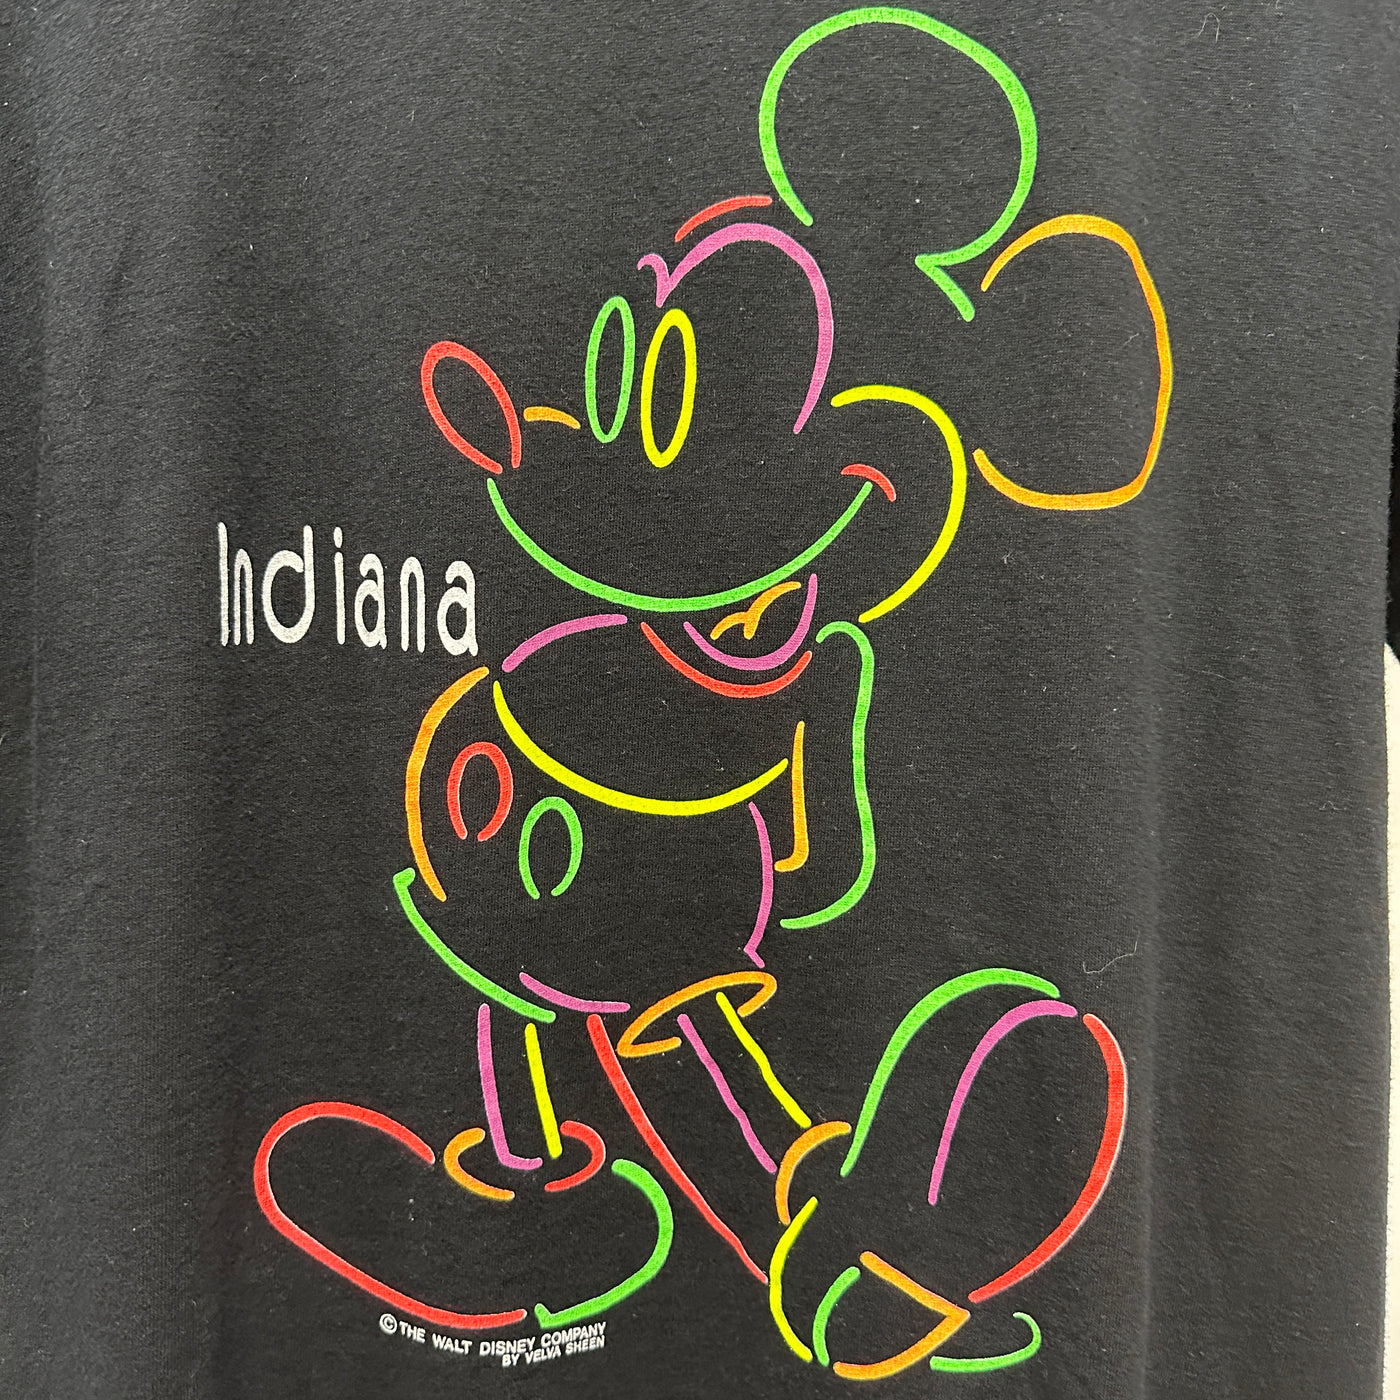 90's Mickey Mouse Neon Black Cartoon T-shirt sz L